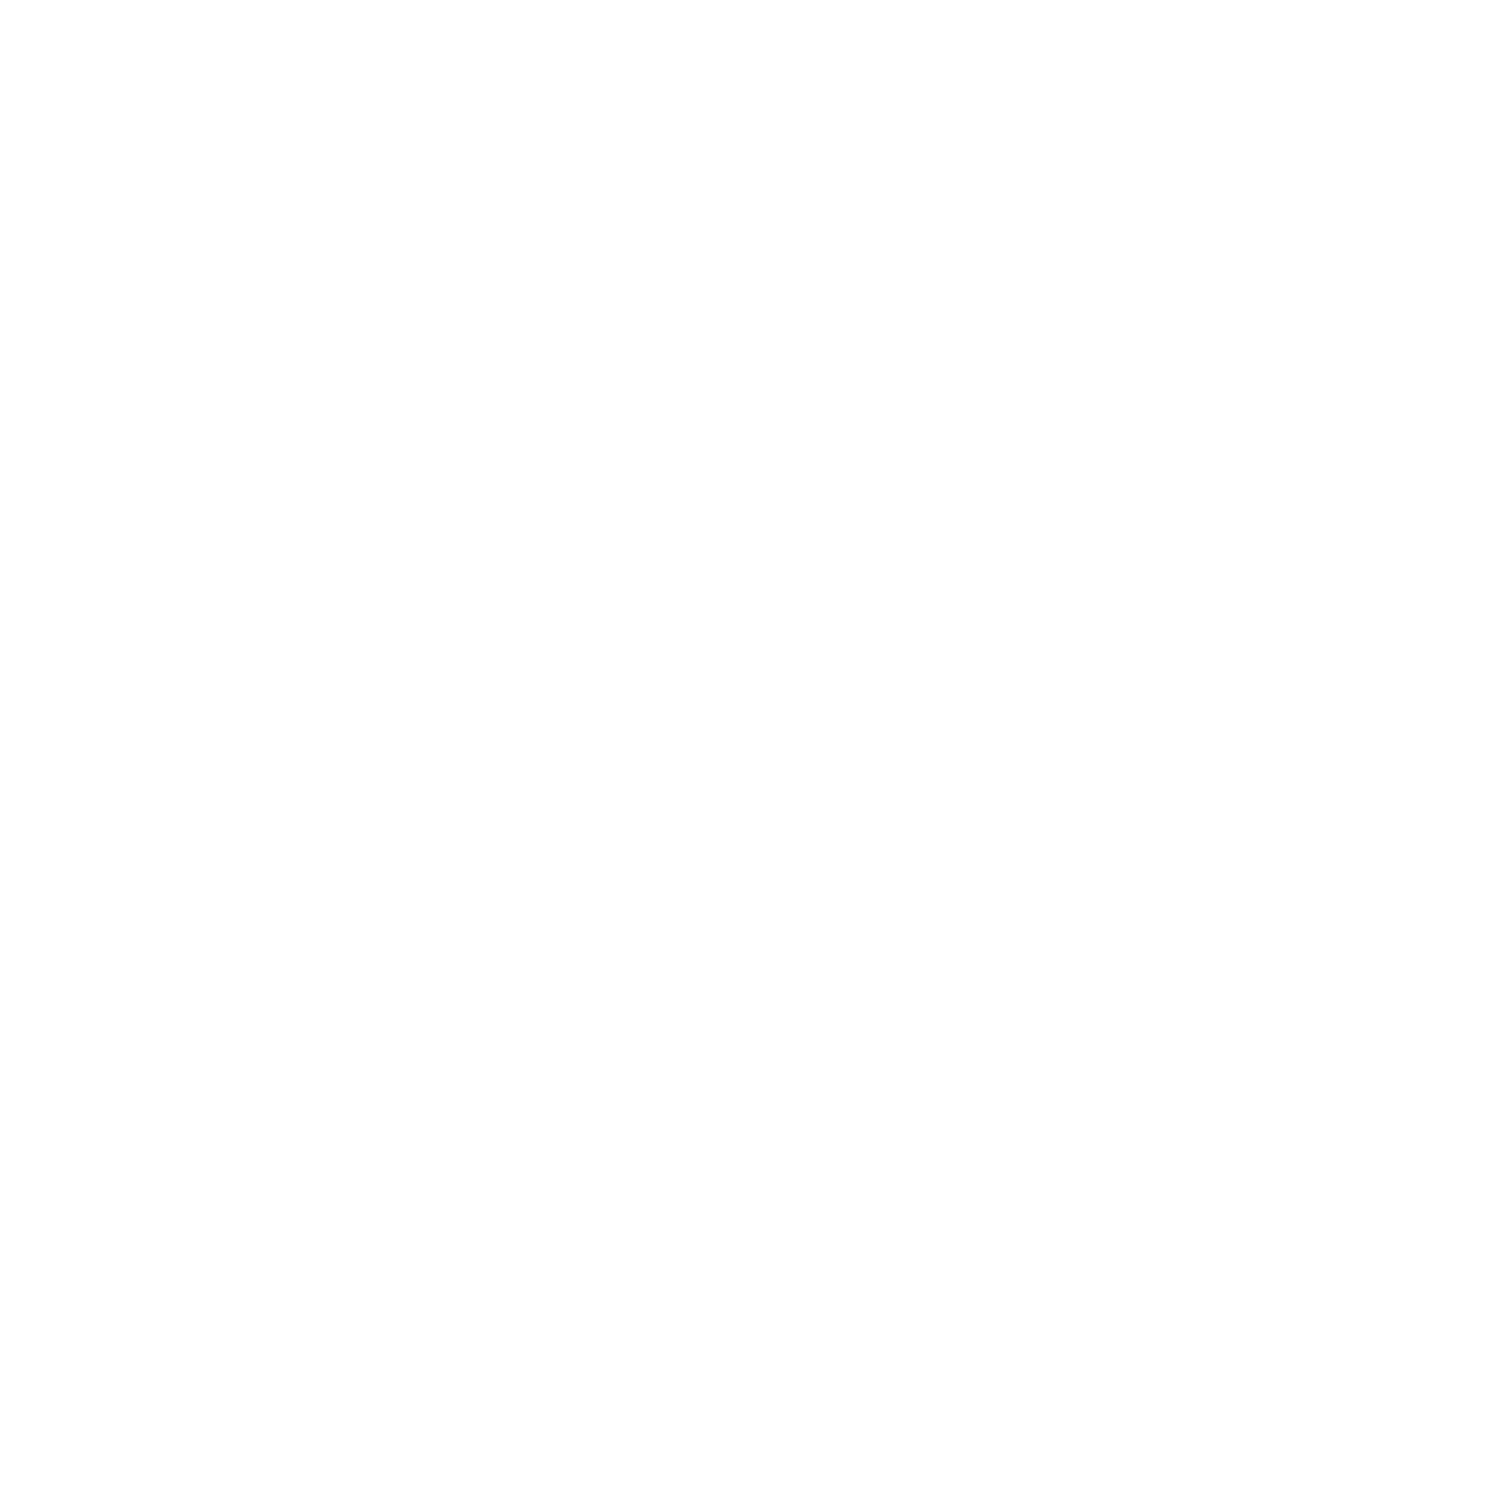 Foxfire Woods and Farm